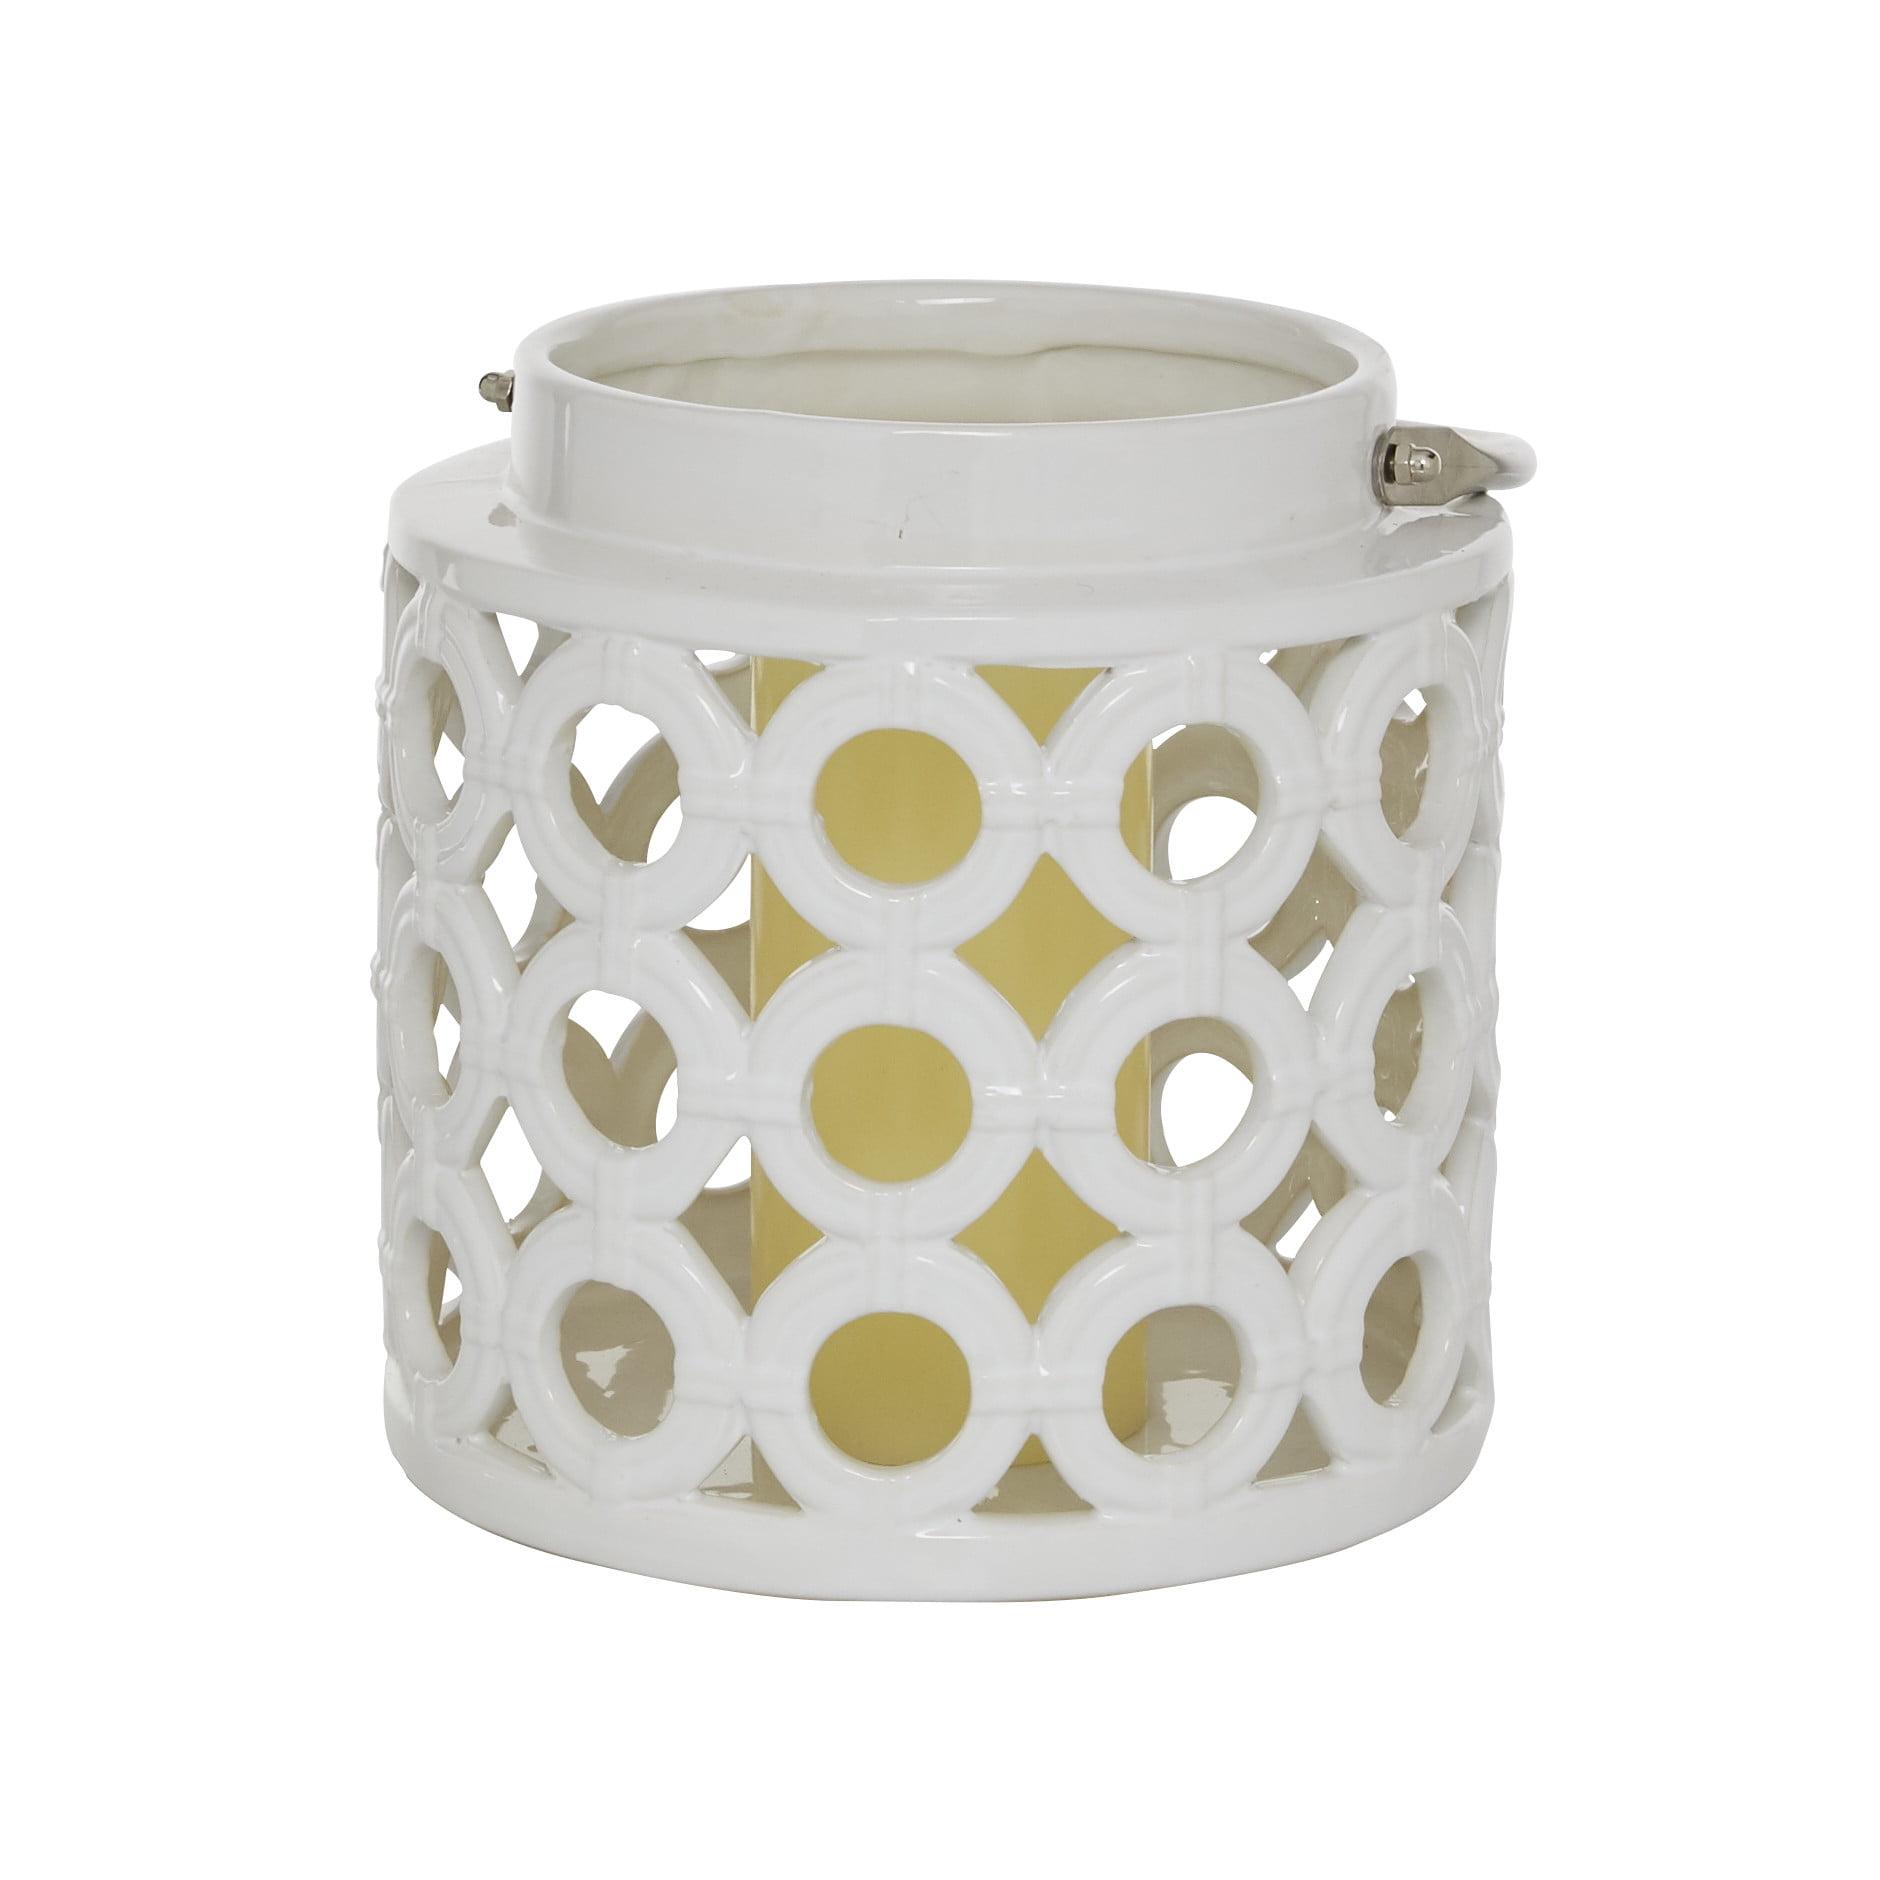 Elegant White Ceramic Hanging Lantern with Geometric Cut-Outs